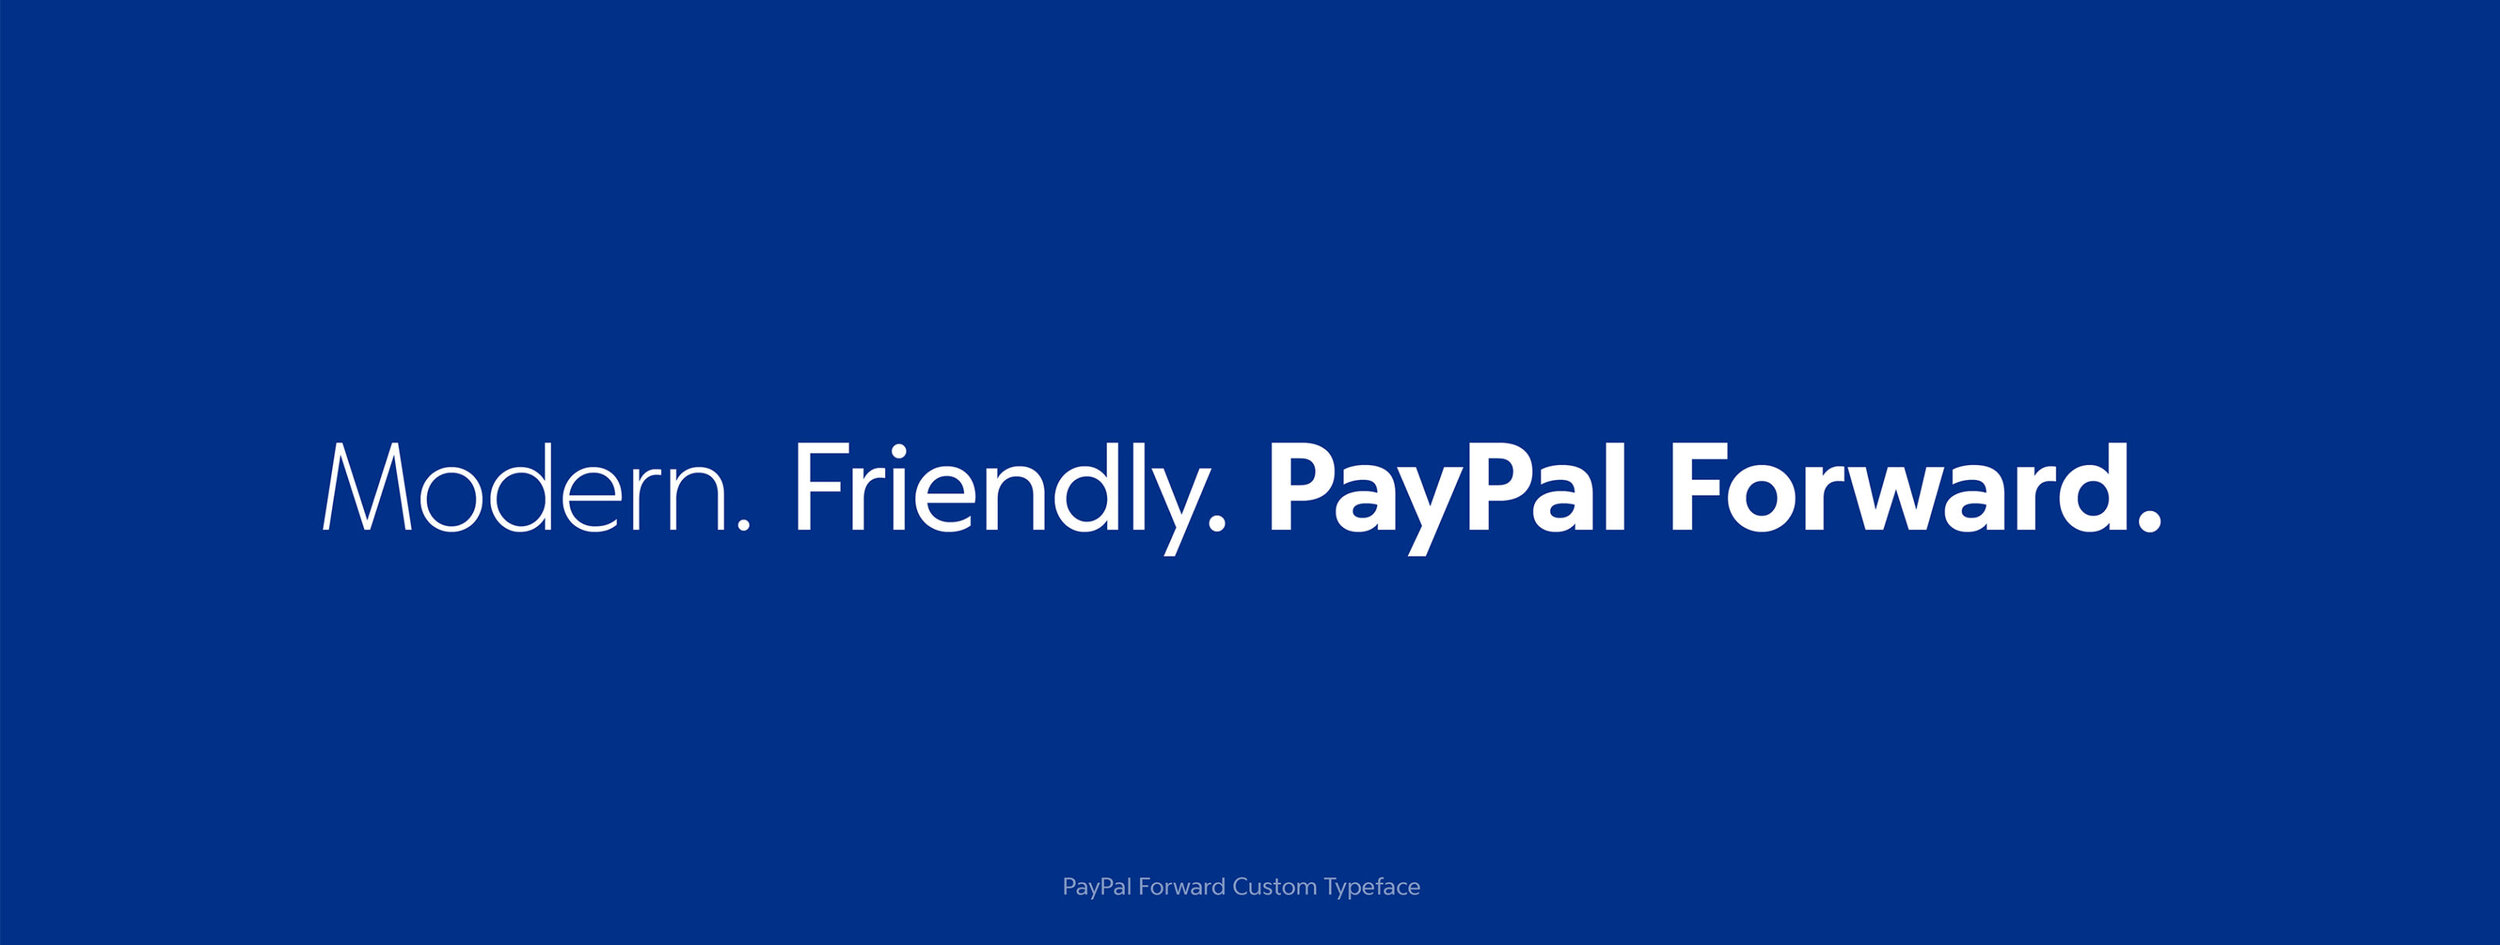 Paypal-Brand-Identity-Brand_13_case_study_2x_3360x1270-3200x1209.9270072993-c-default.jpg